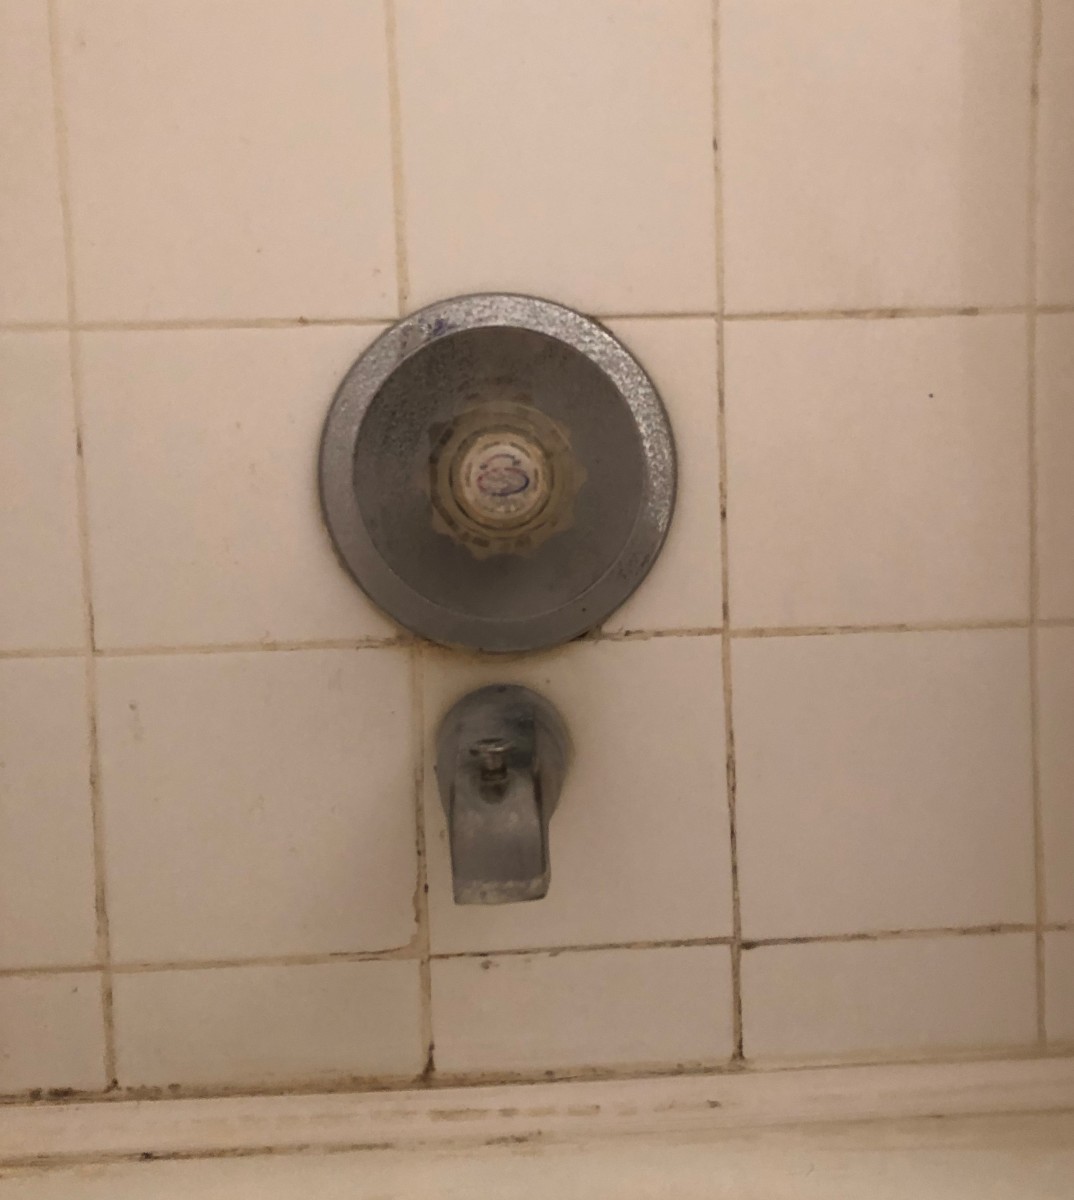 Replace A Single Handle Shower Valve, How To Fix A Bathtub Faucet Handle